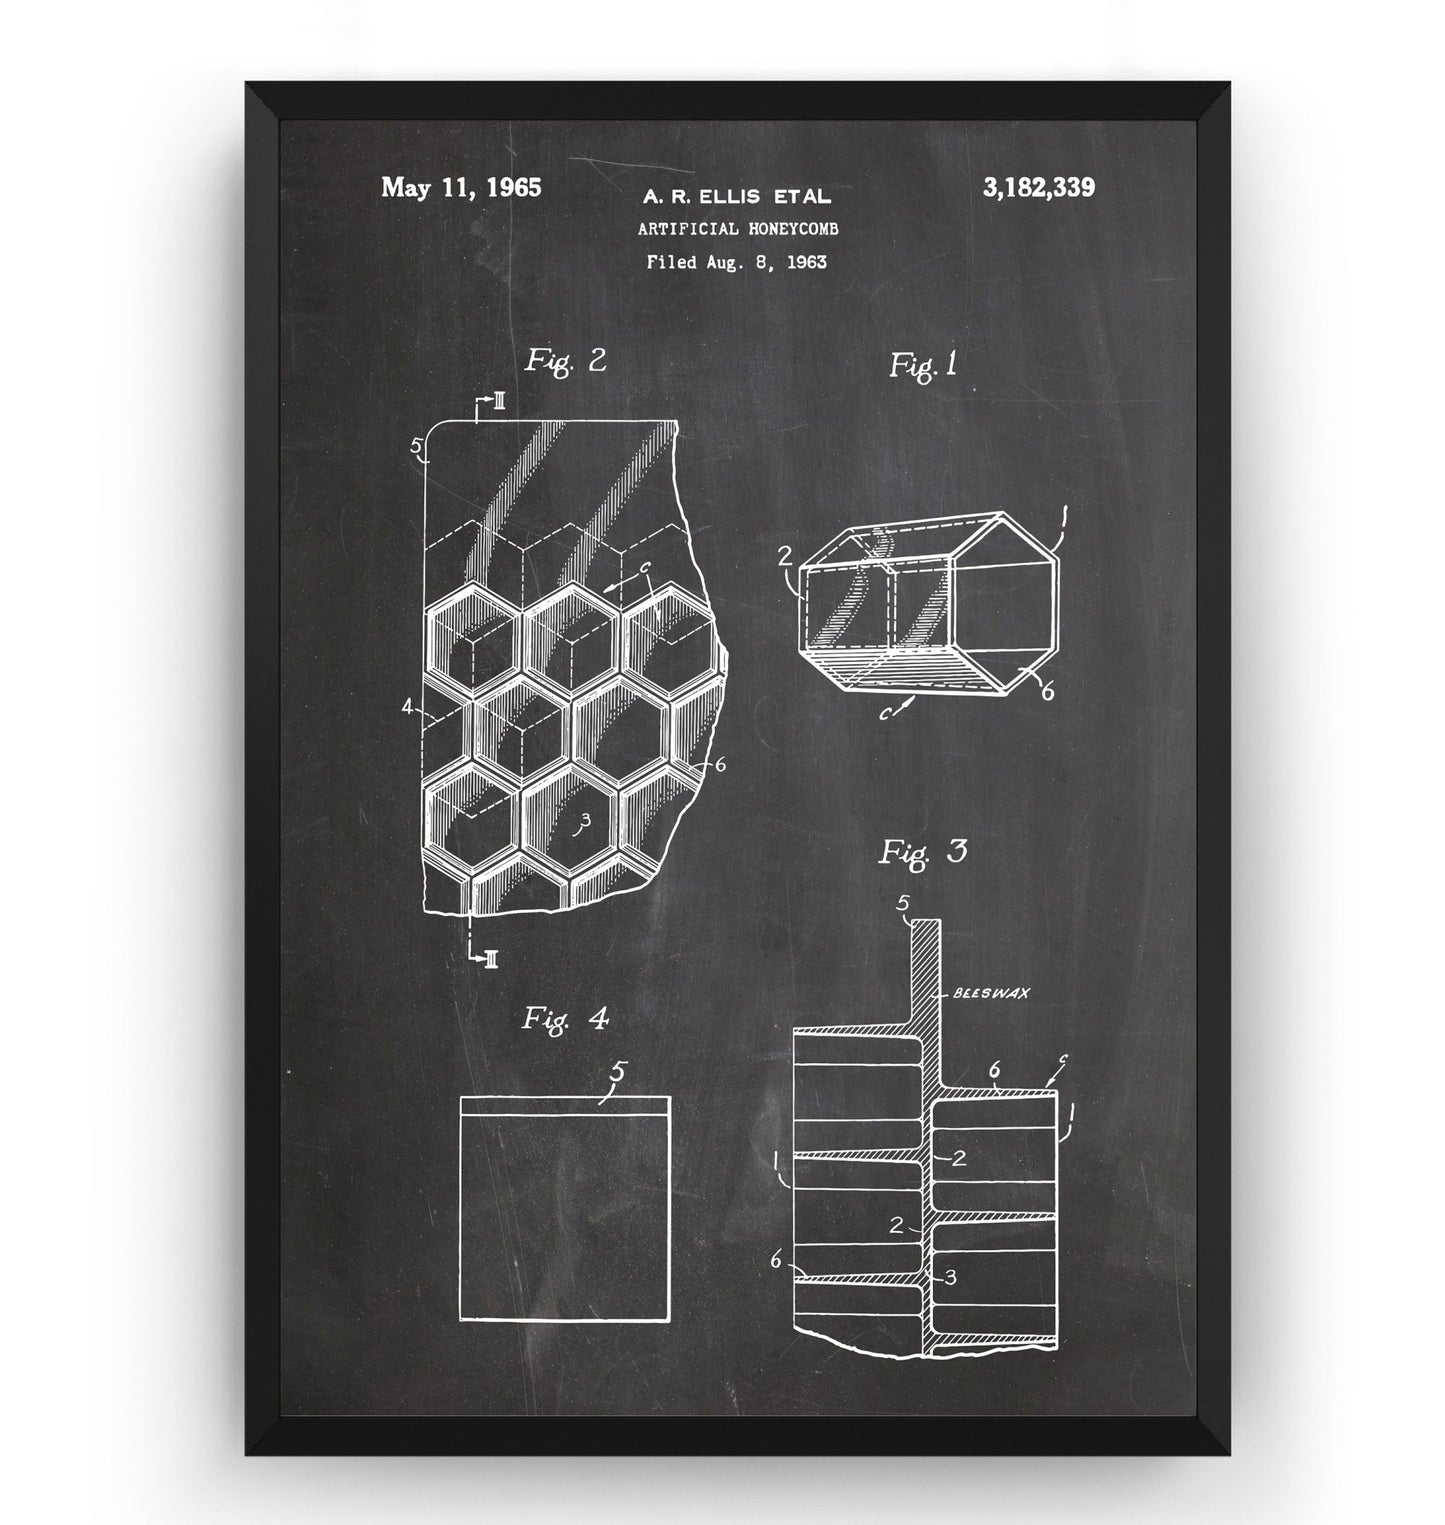 Artificial Honeycomb 1965 Patent Print - Magic Posters